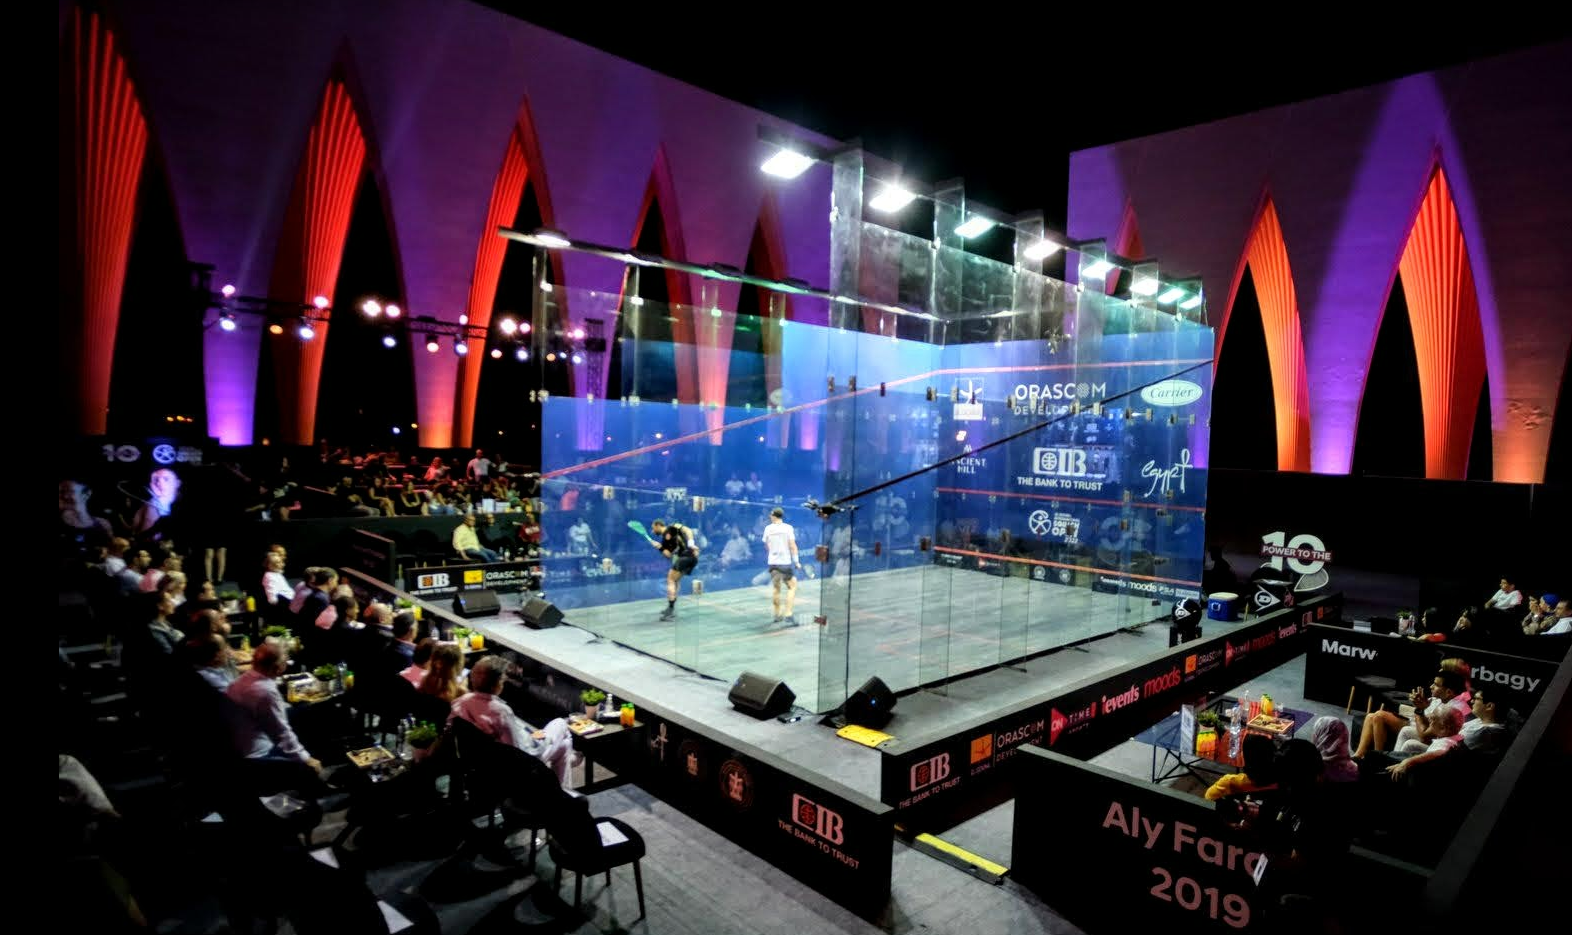 PSA World Squash Championships 2023 – 03 – 11 May, Chicago, United States